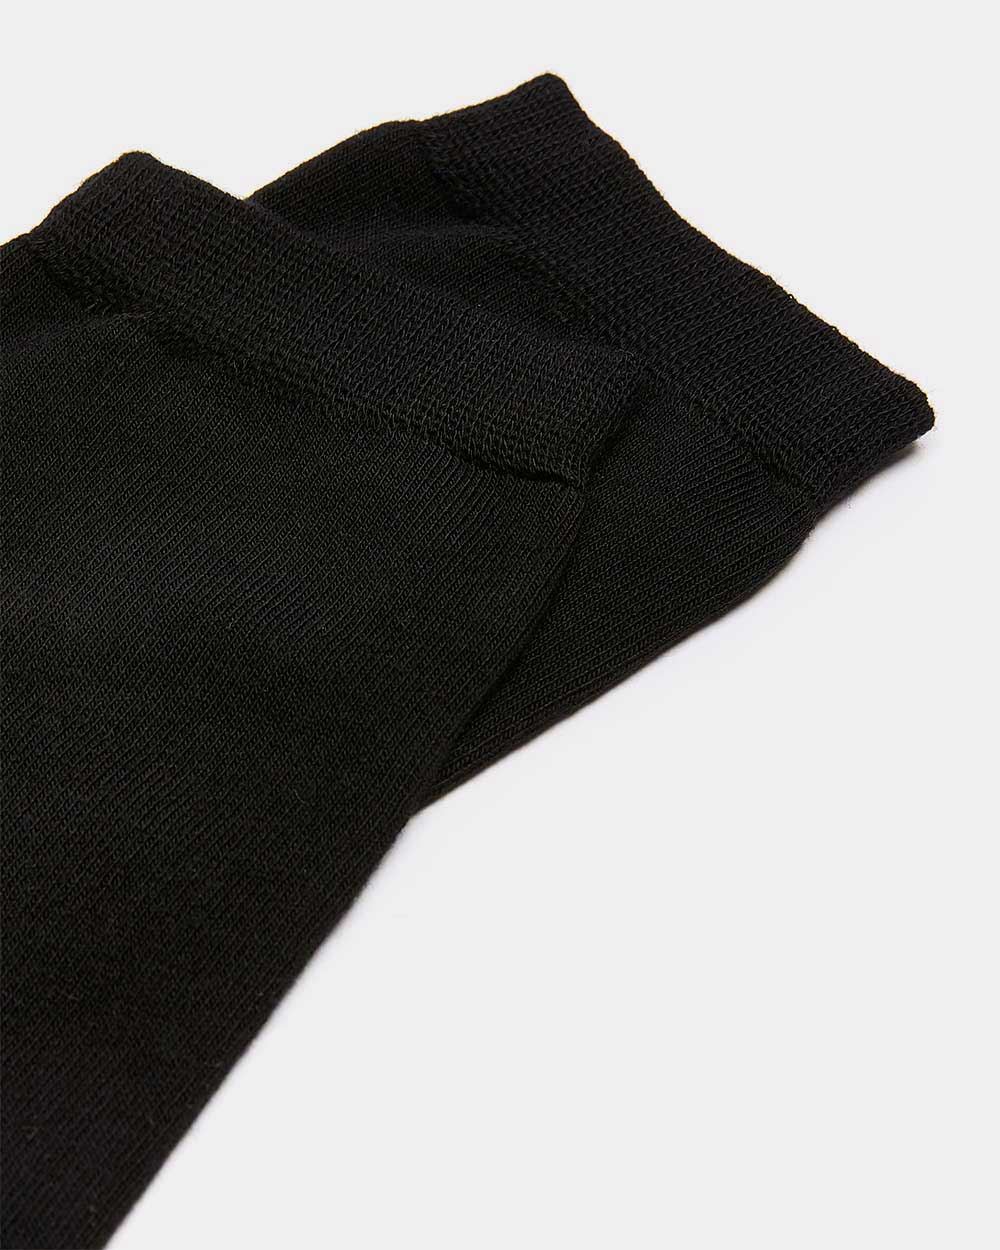 Basic Black Crew Socks